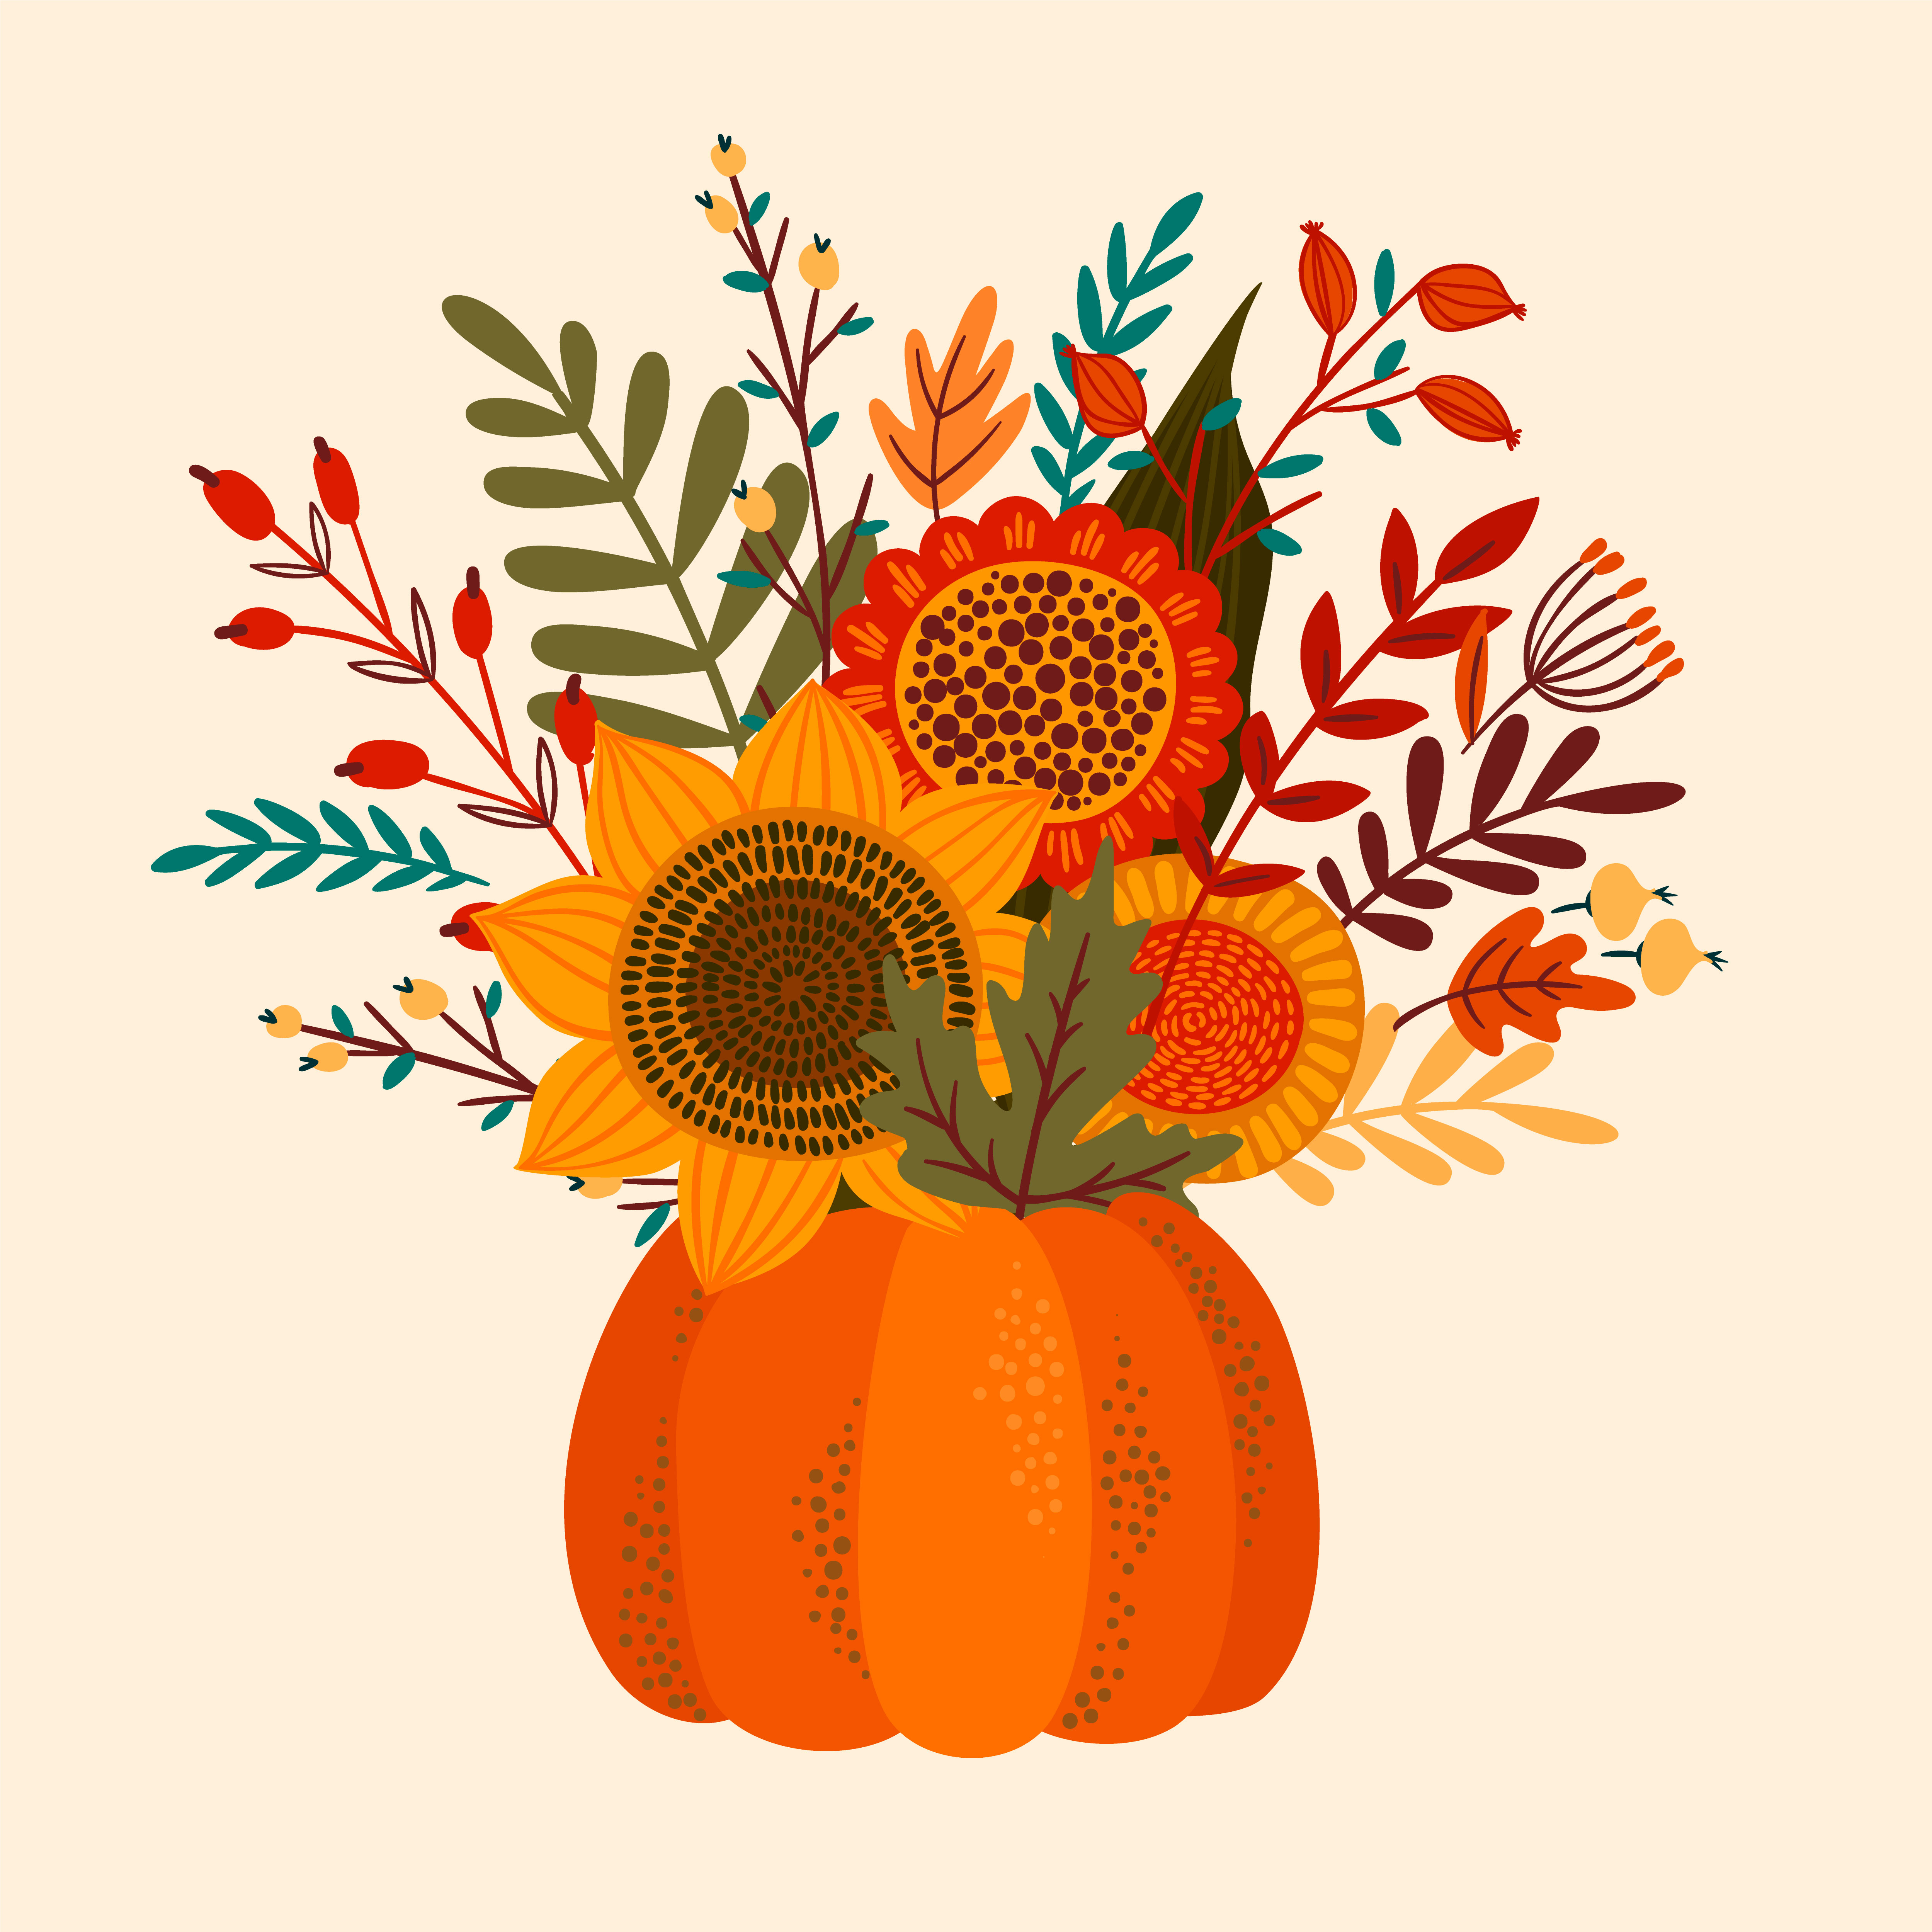 https://static.vecteezy.com/system/resources/previews/000/676/307/original/vector-autumn-flower-bouquet-in-pumpkin.jpg